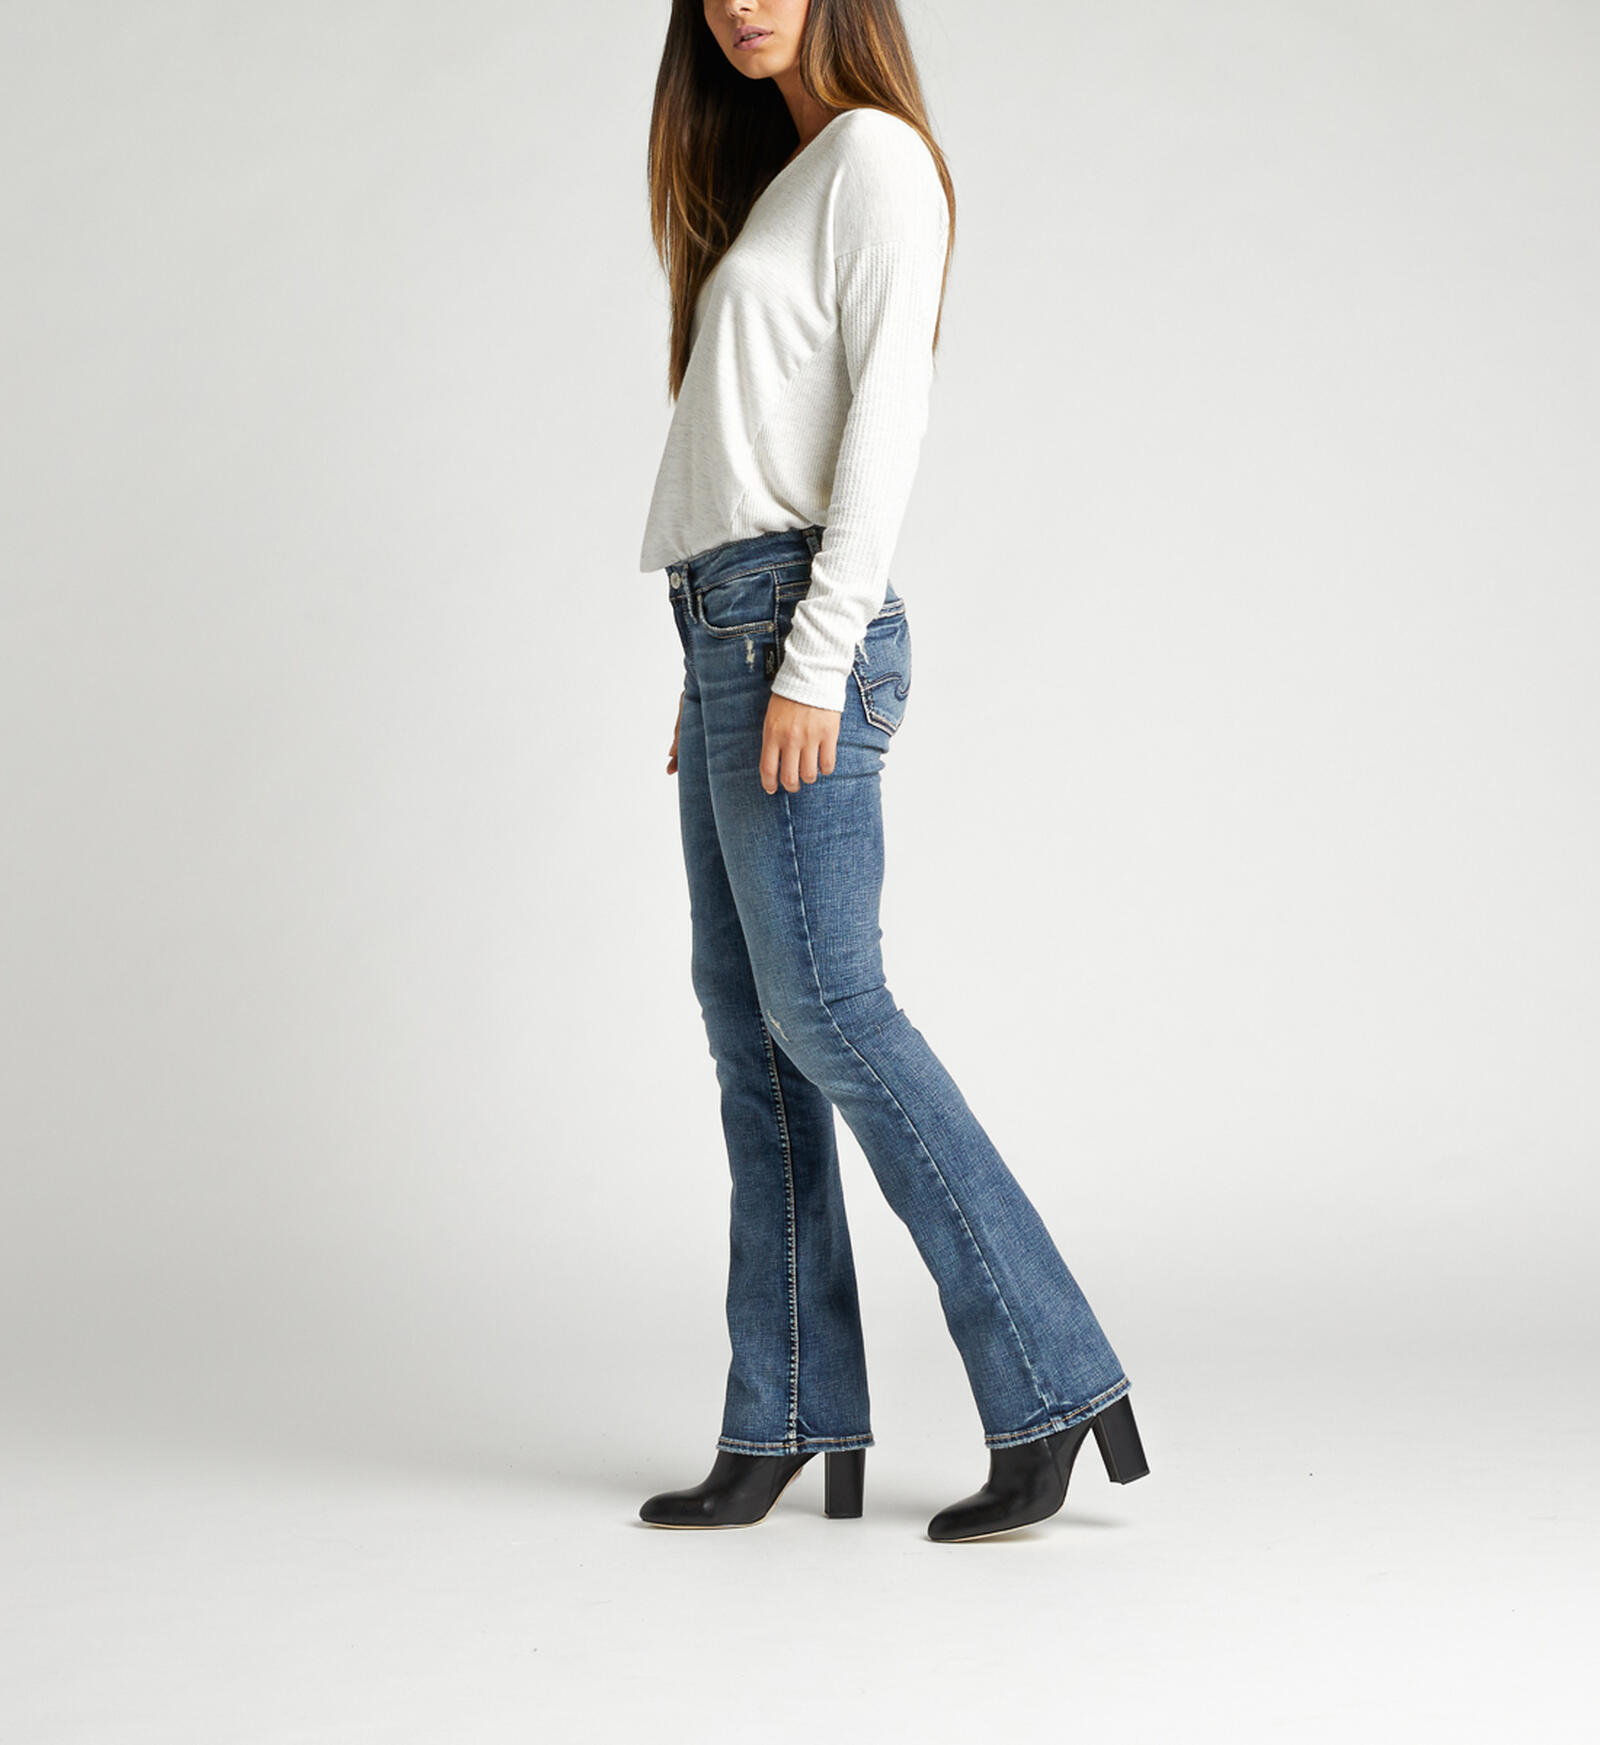 Silver Jeans Co. Women's Elyse Mid Rise Slim Bootcut Jeans, Waist Sizes  24-36 